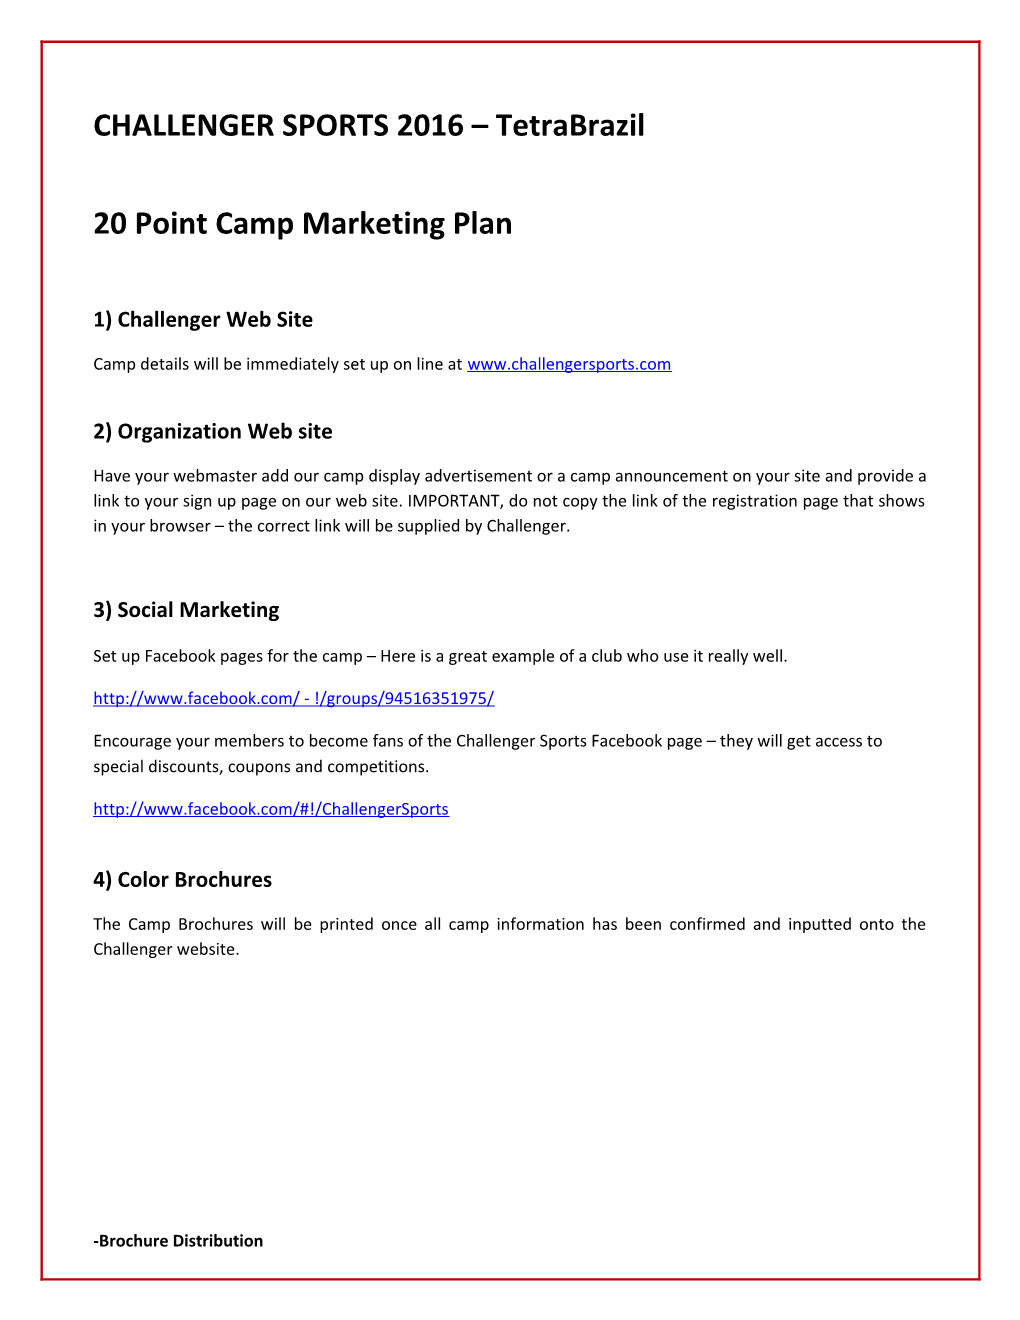 20 Point Camp Marketing Plan